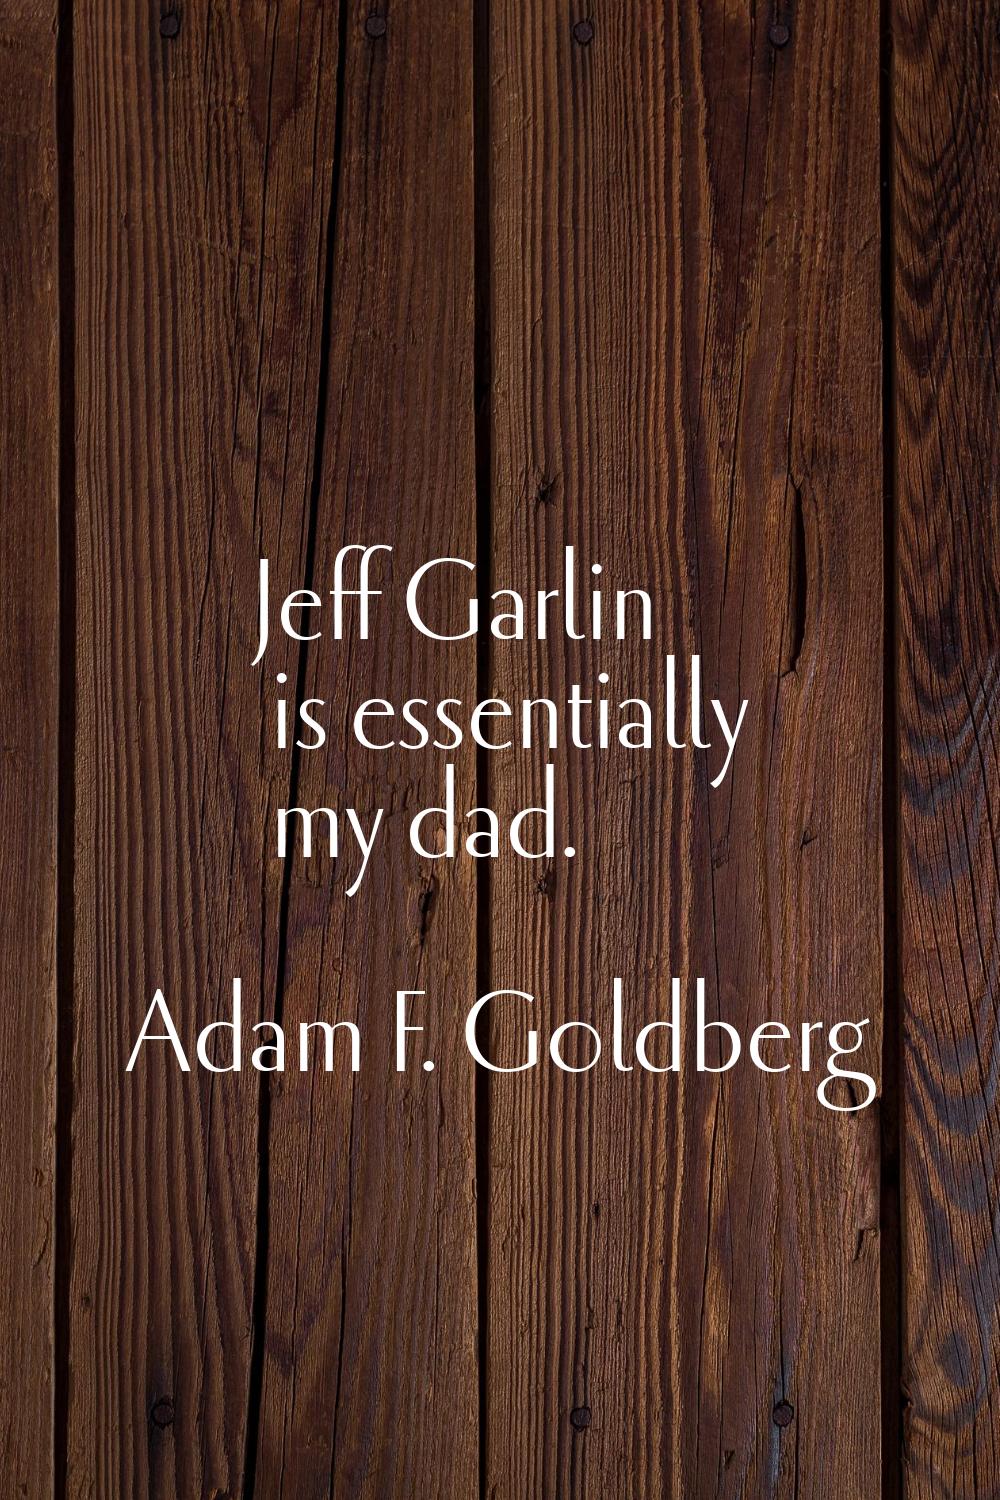 Jeff Garlin is essentially my dad.